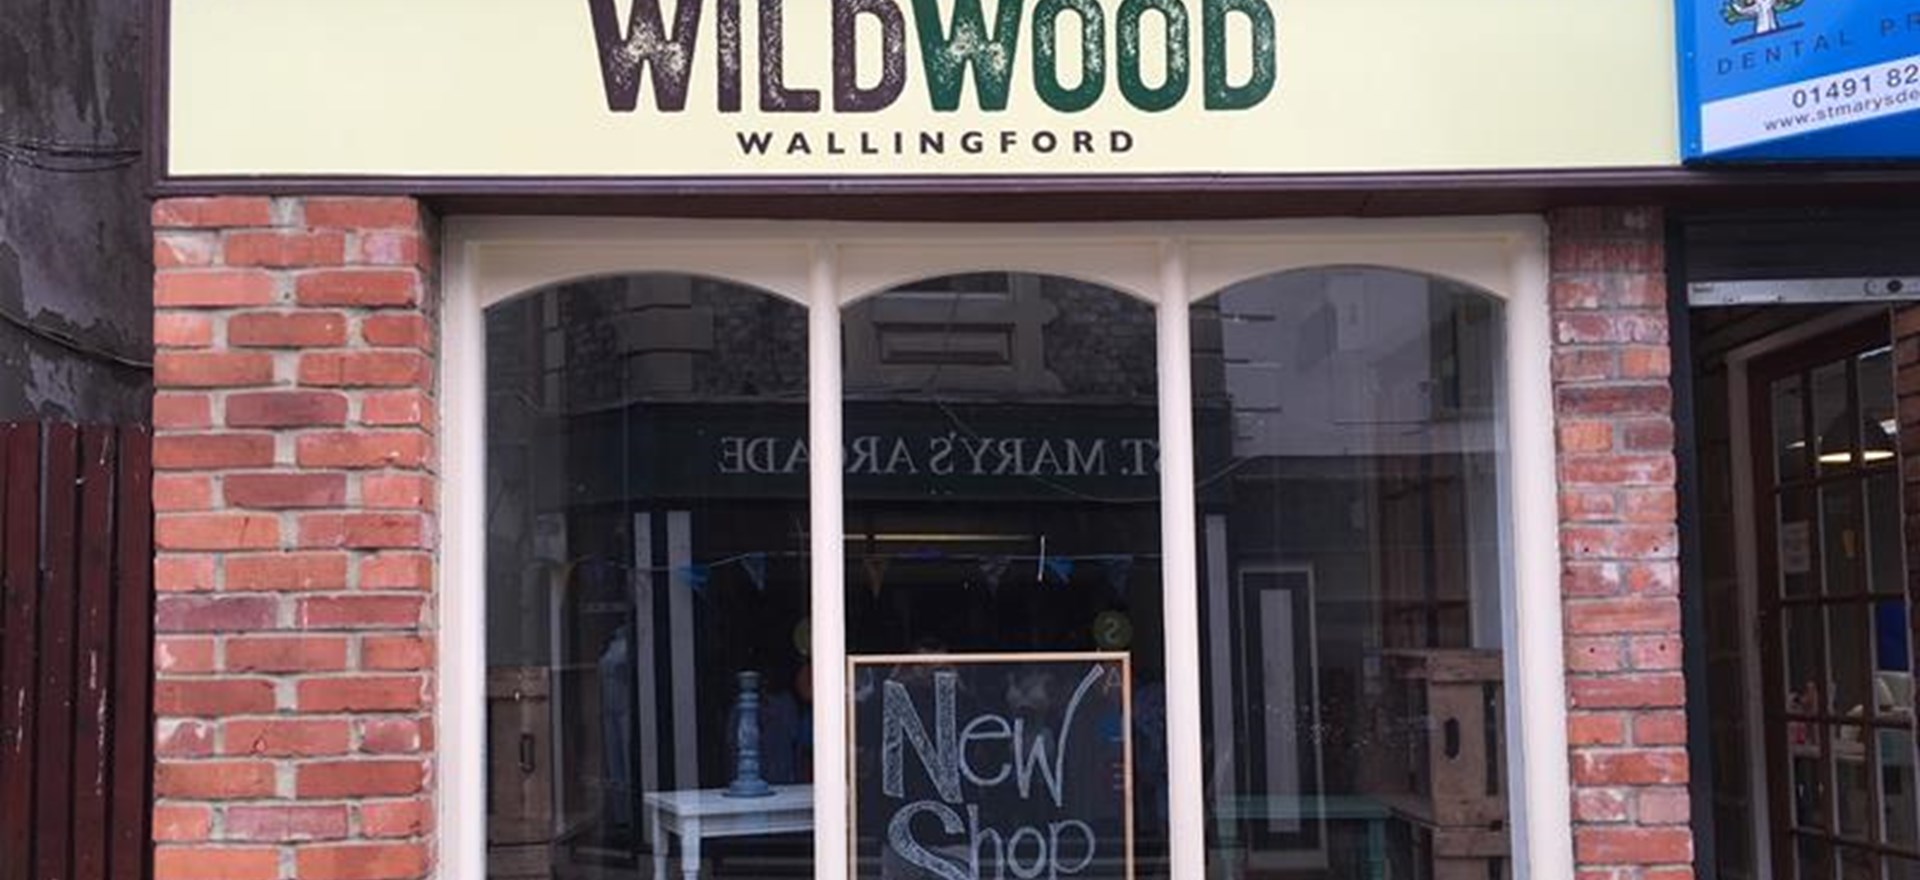 Wildwood Wallingdford Exterios Shop Fasica Oxford